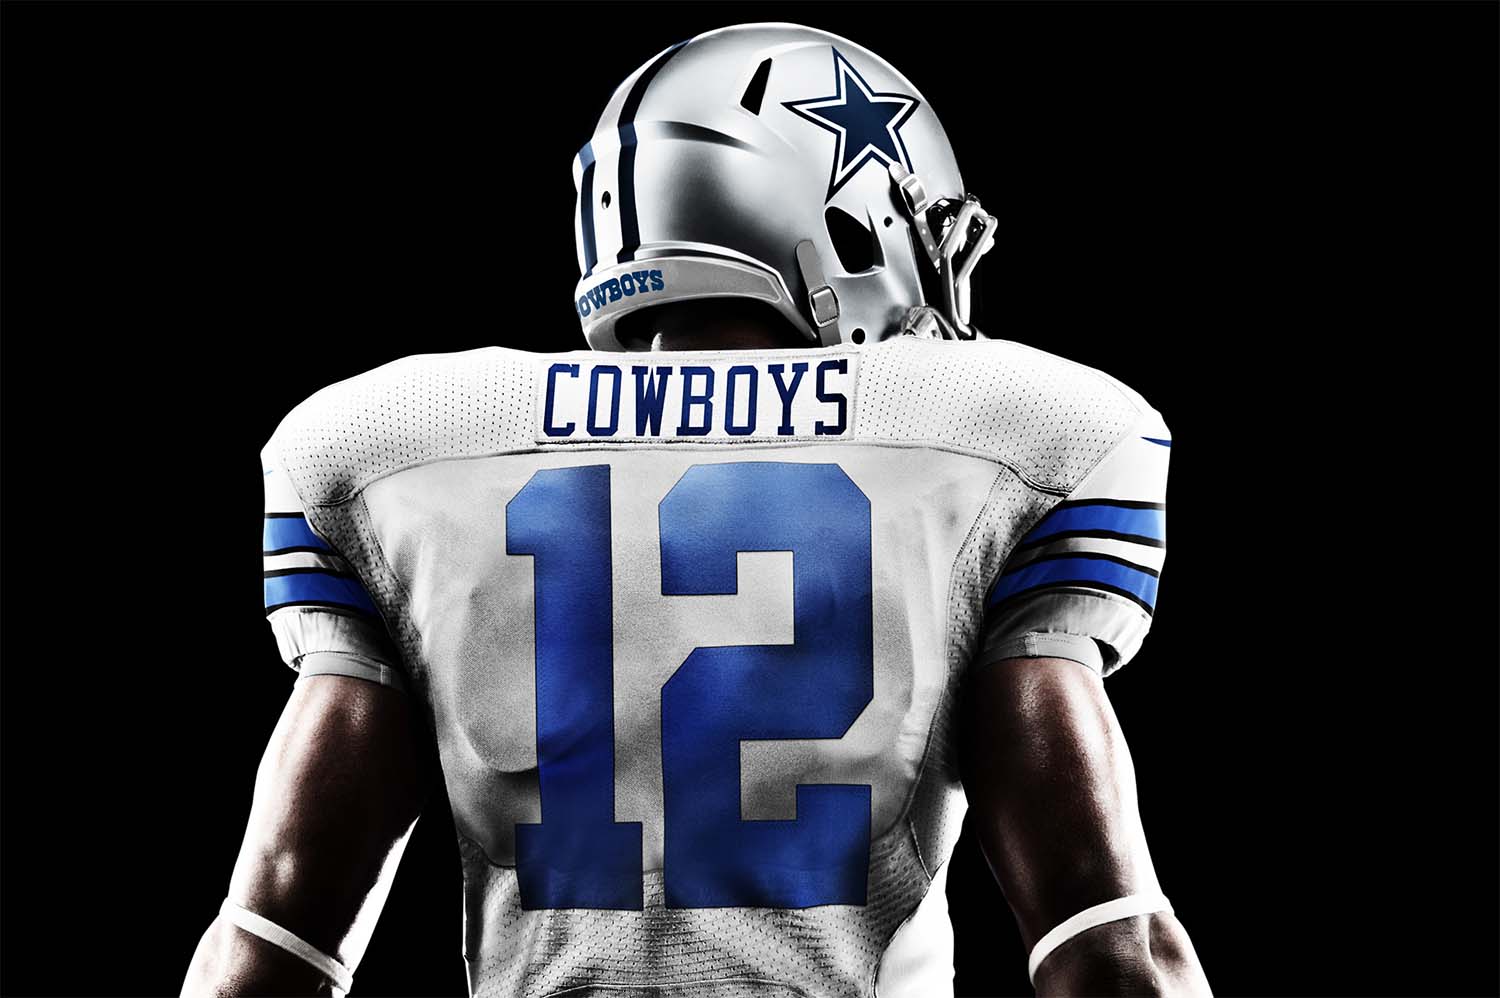 New Nike 2013 Dallas Cowboys Football Uniform – New Dallas Cowboys